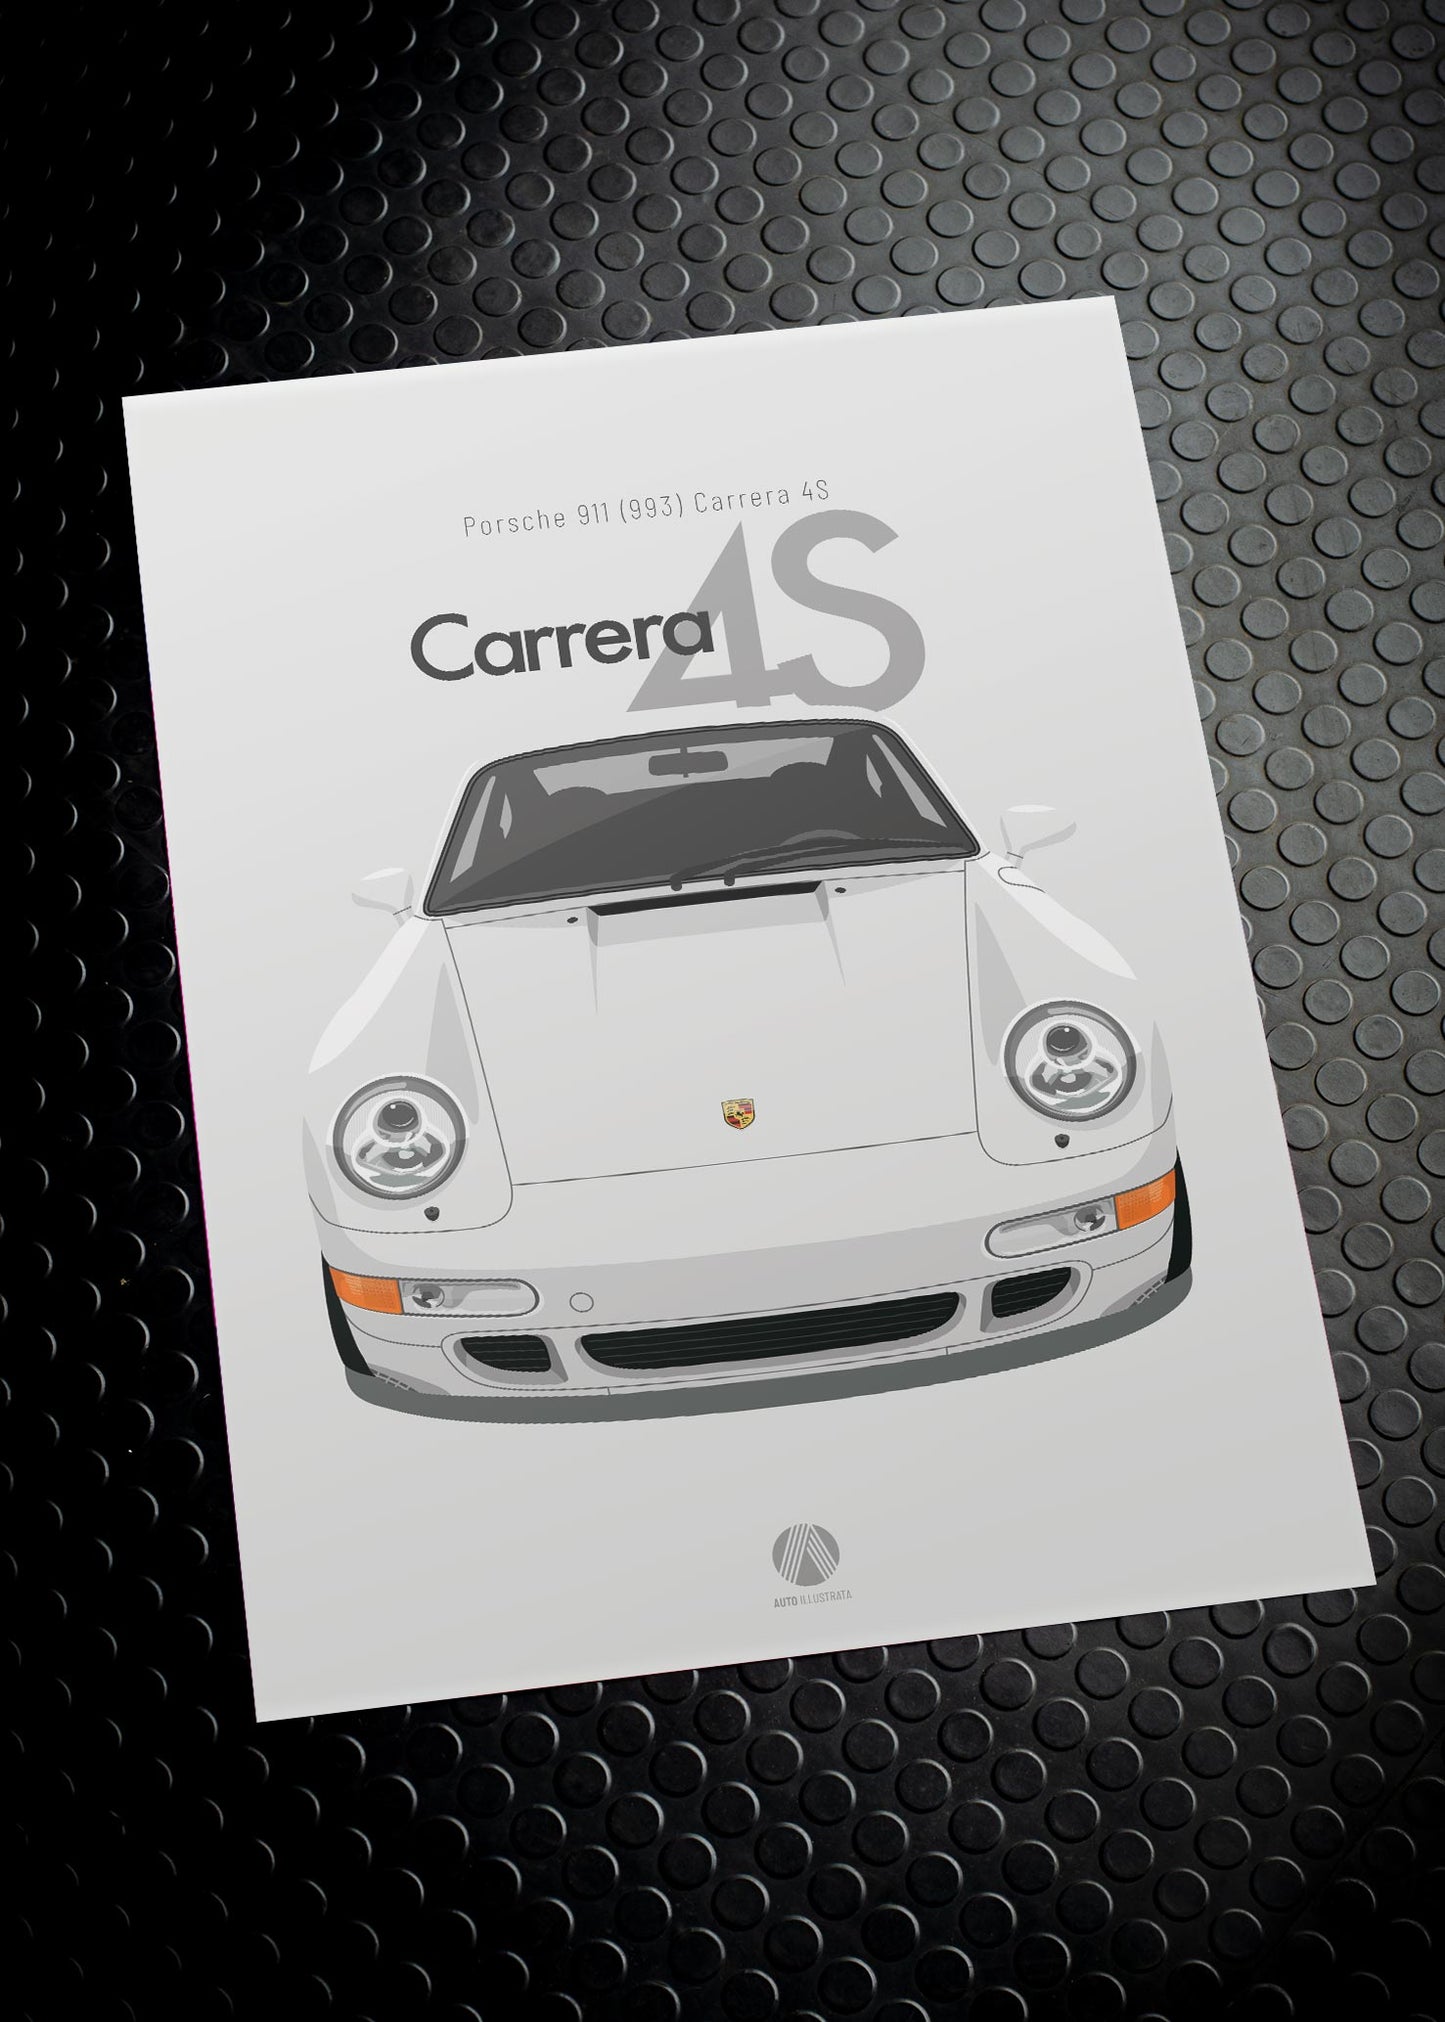 1997 Porsche 911 (993) Carrera 4S Grand Prix White - poster print